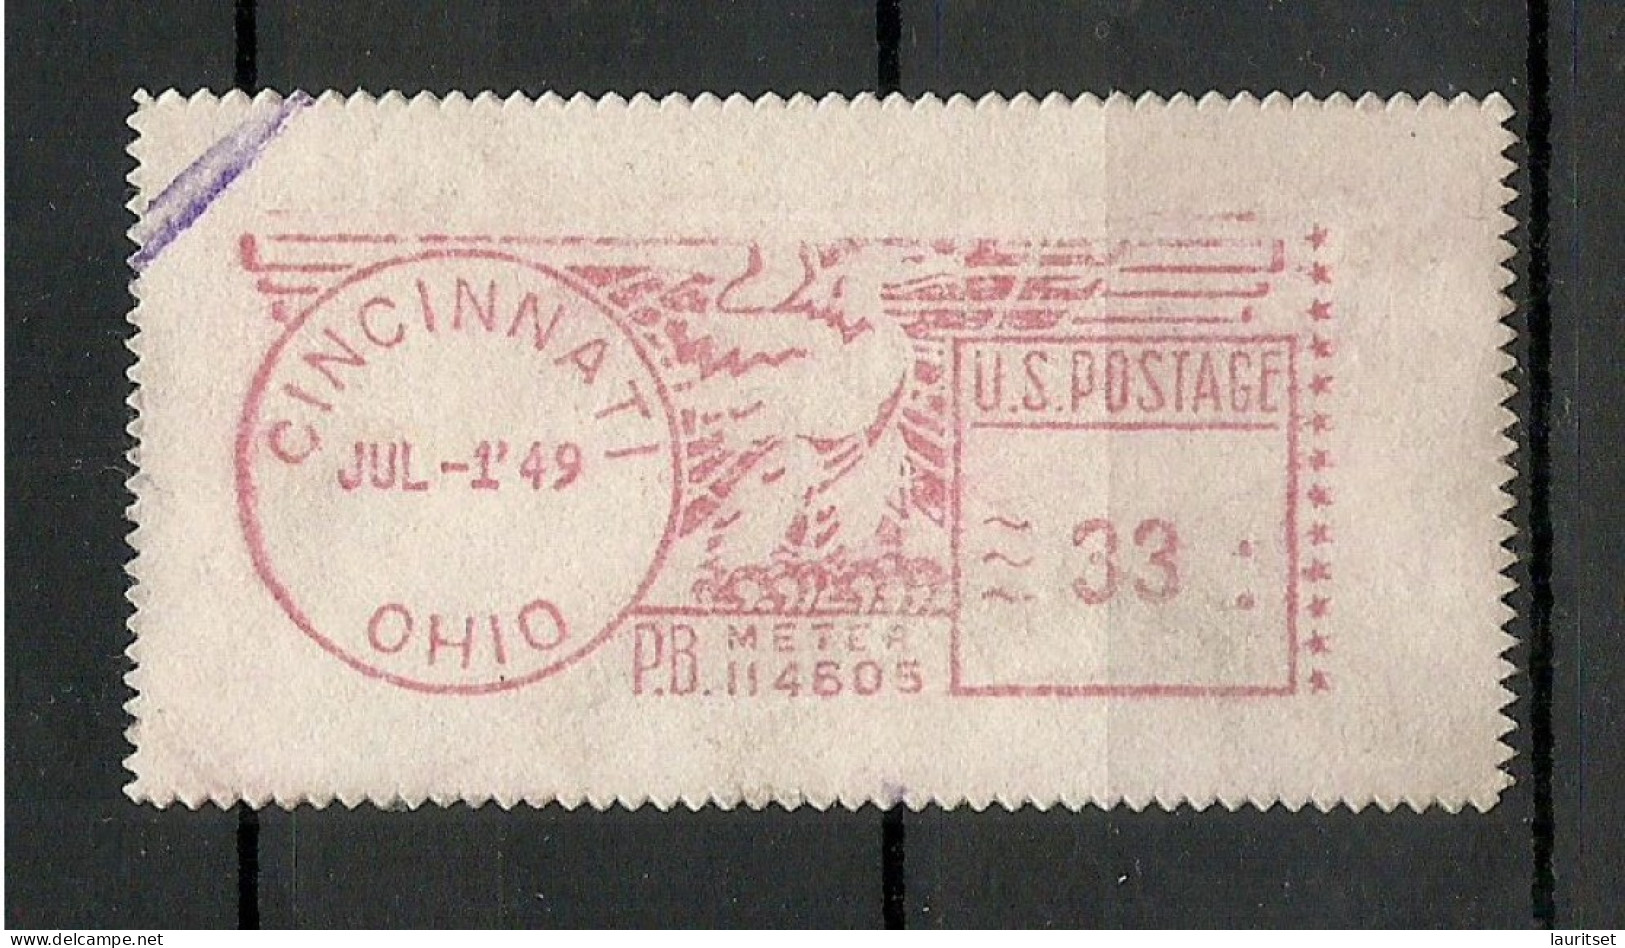 USA 1949 Cincinnati Ohio Meter Stamp - Gebraucht